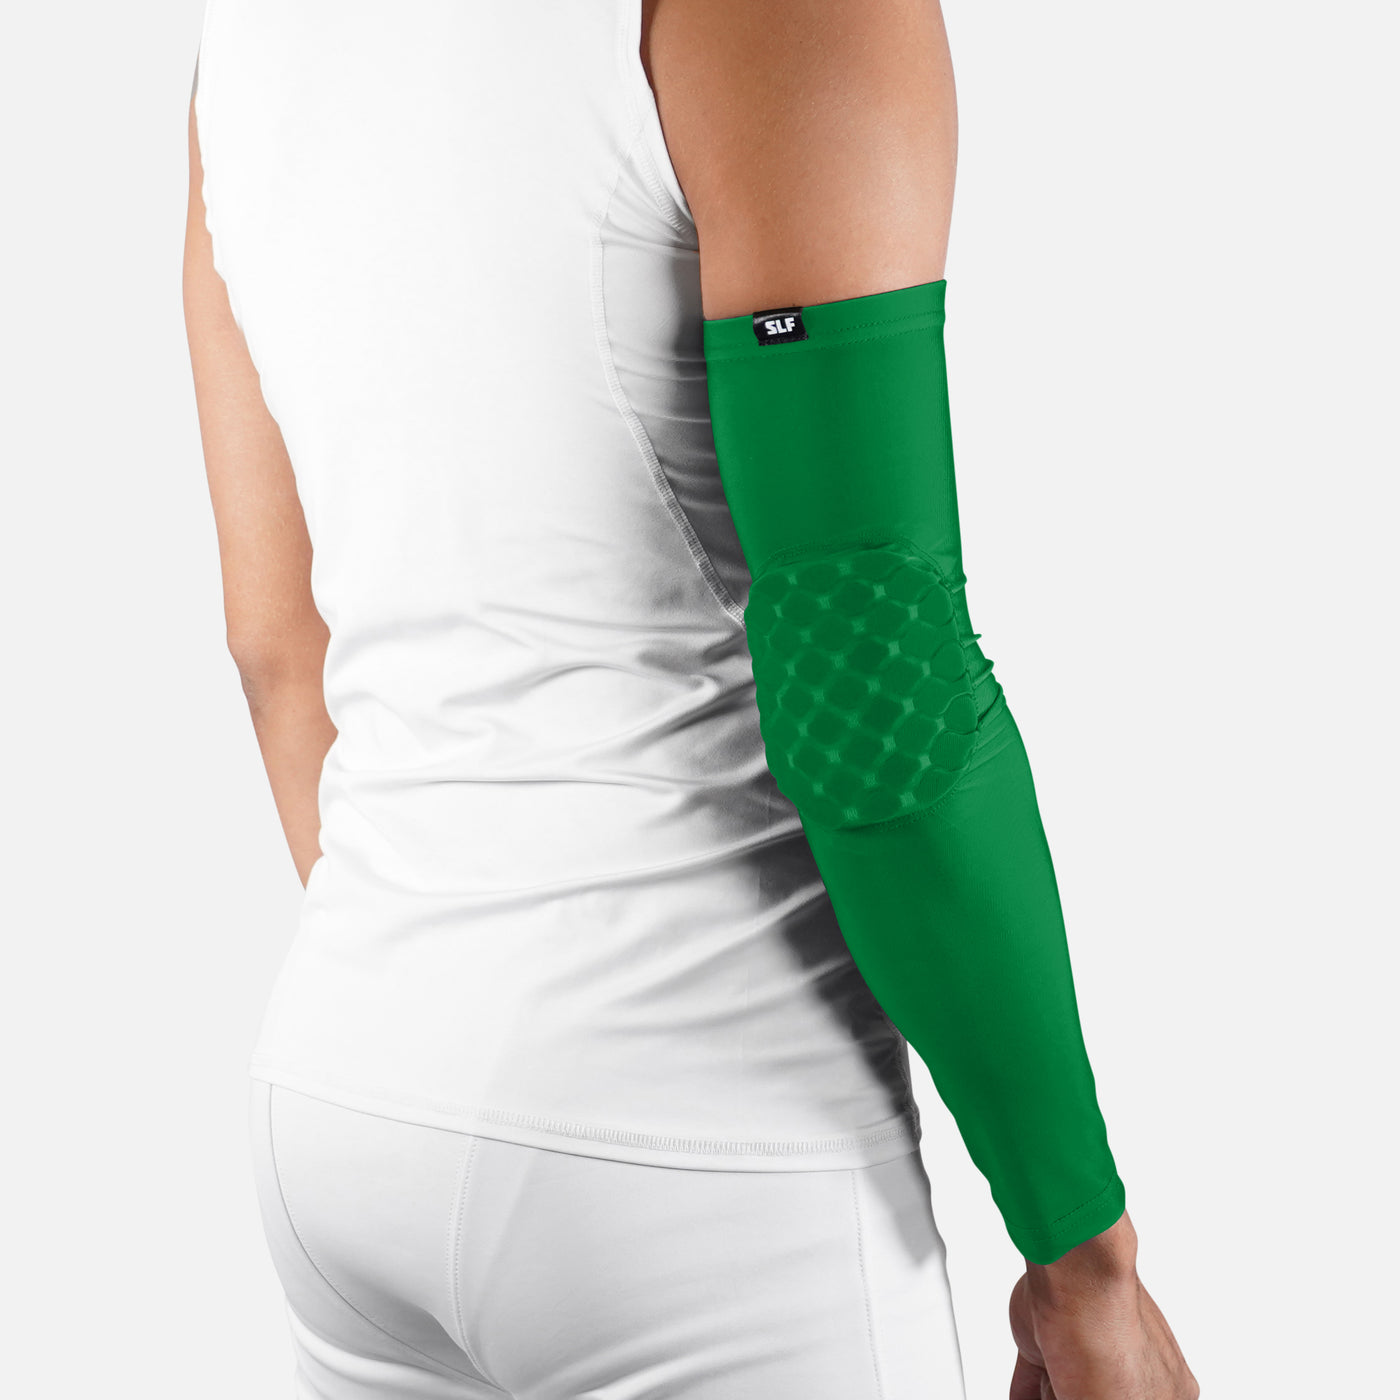 Hue Green Padded Arm Sleeve